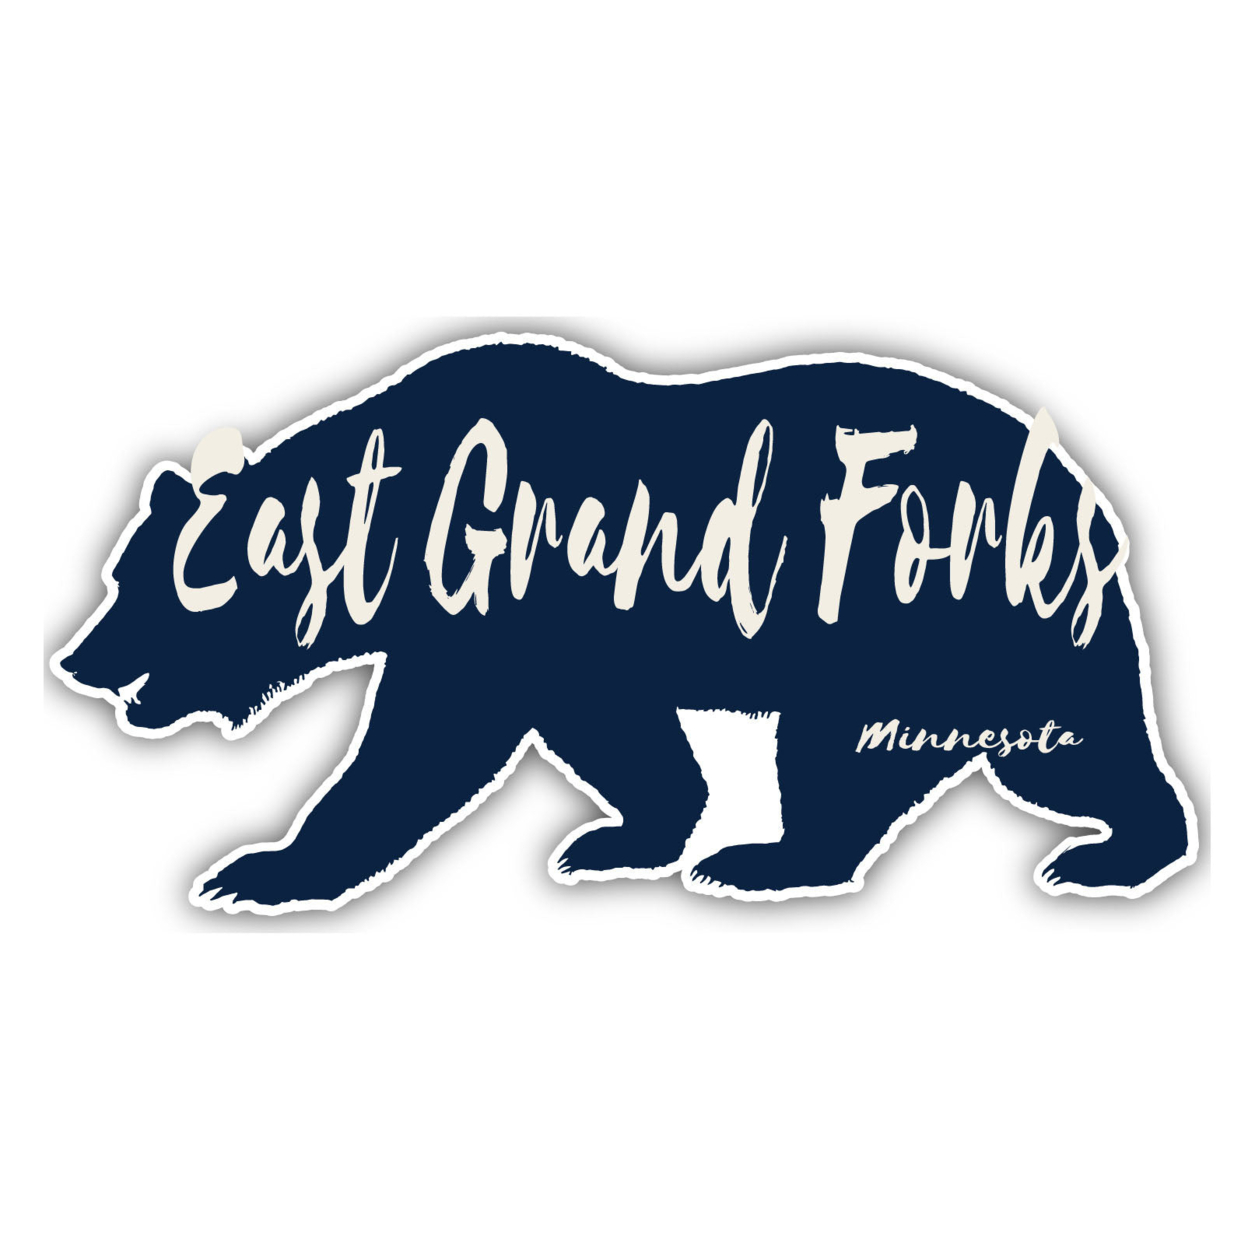 East Grand Forks Minnesota Souvenir Decorative Stickers (Choose Theme And Size) - Single Unit, 6-Inch, Bear